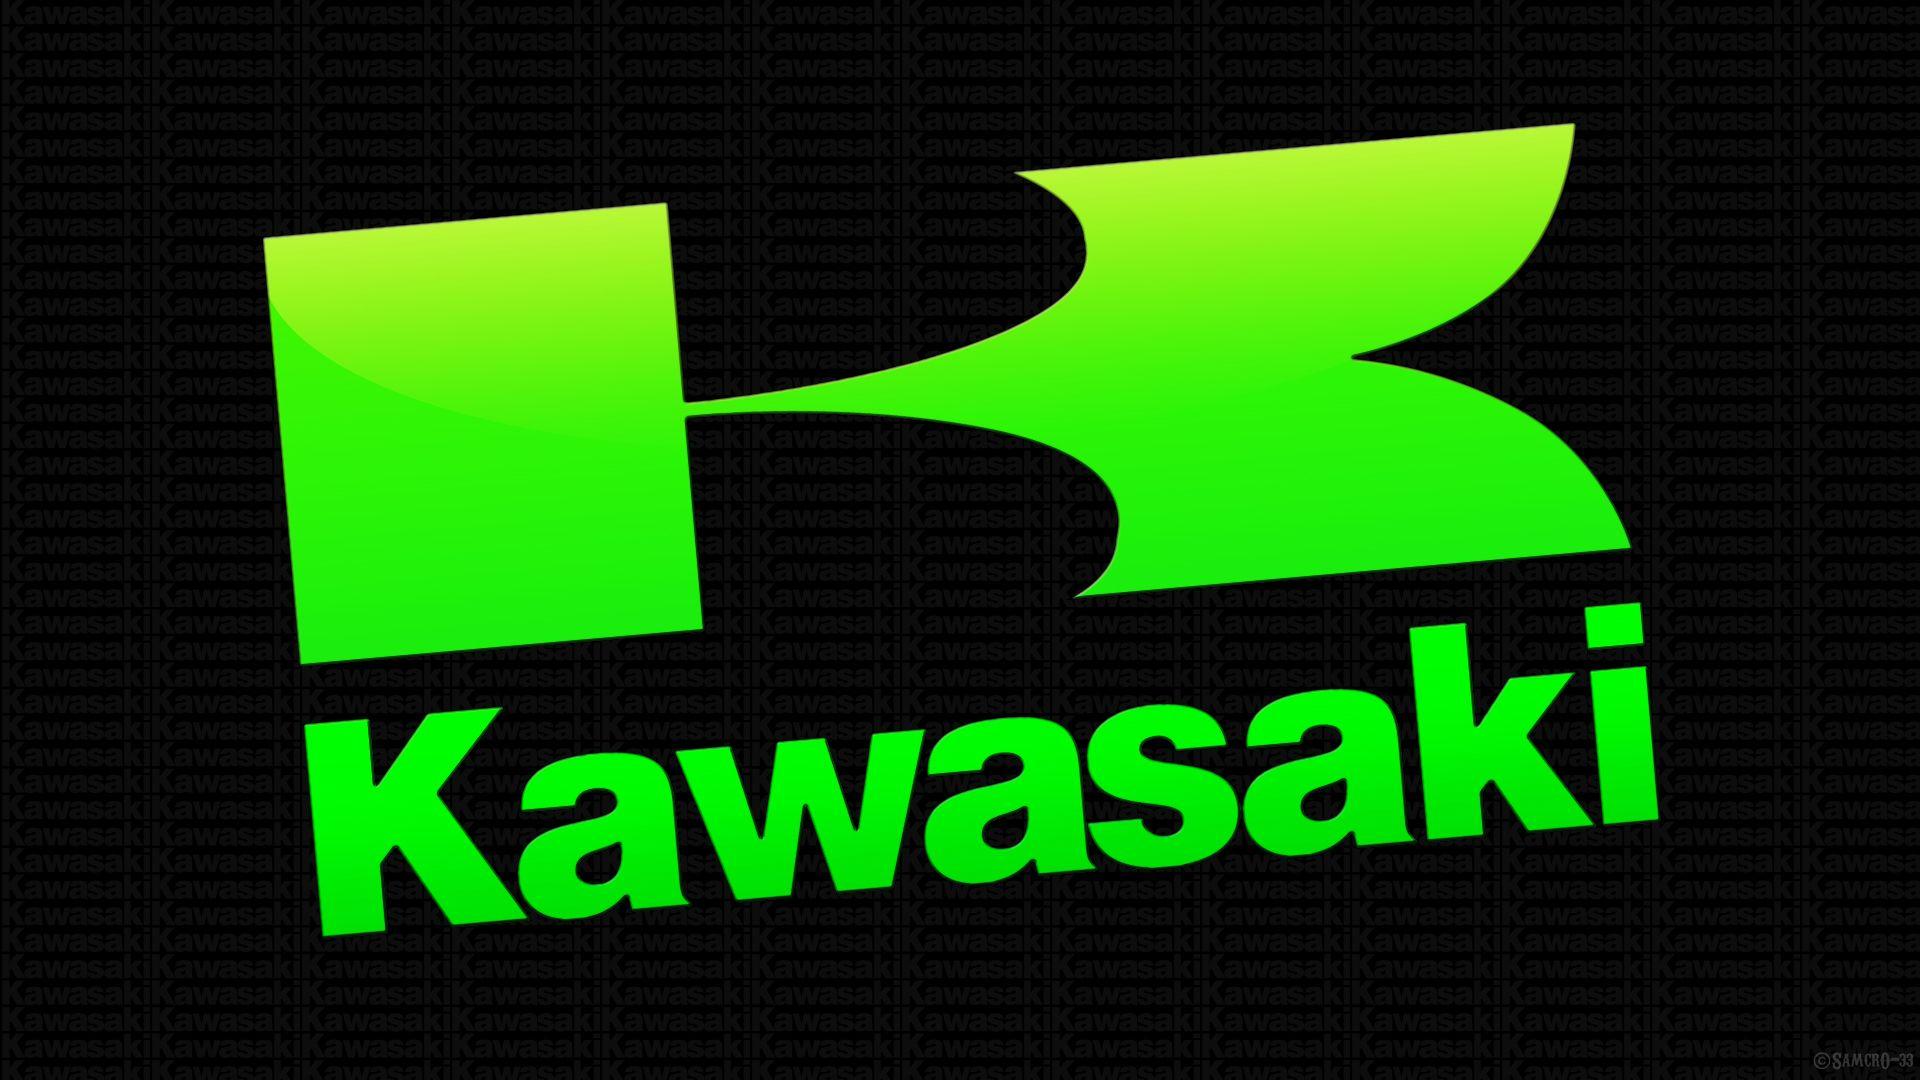 Kawasaki teases imminent ZX launch